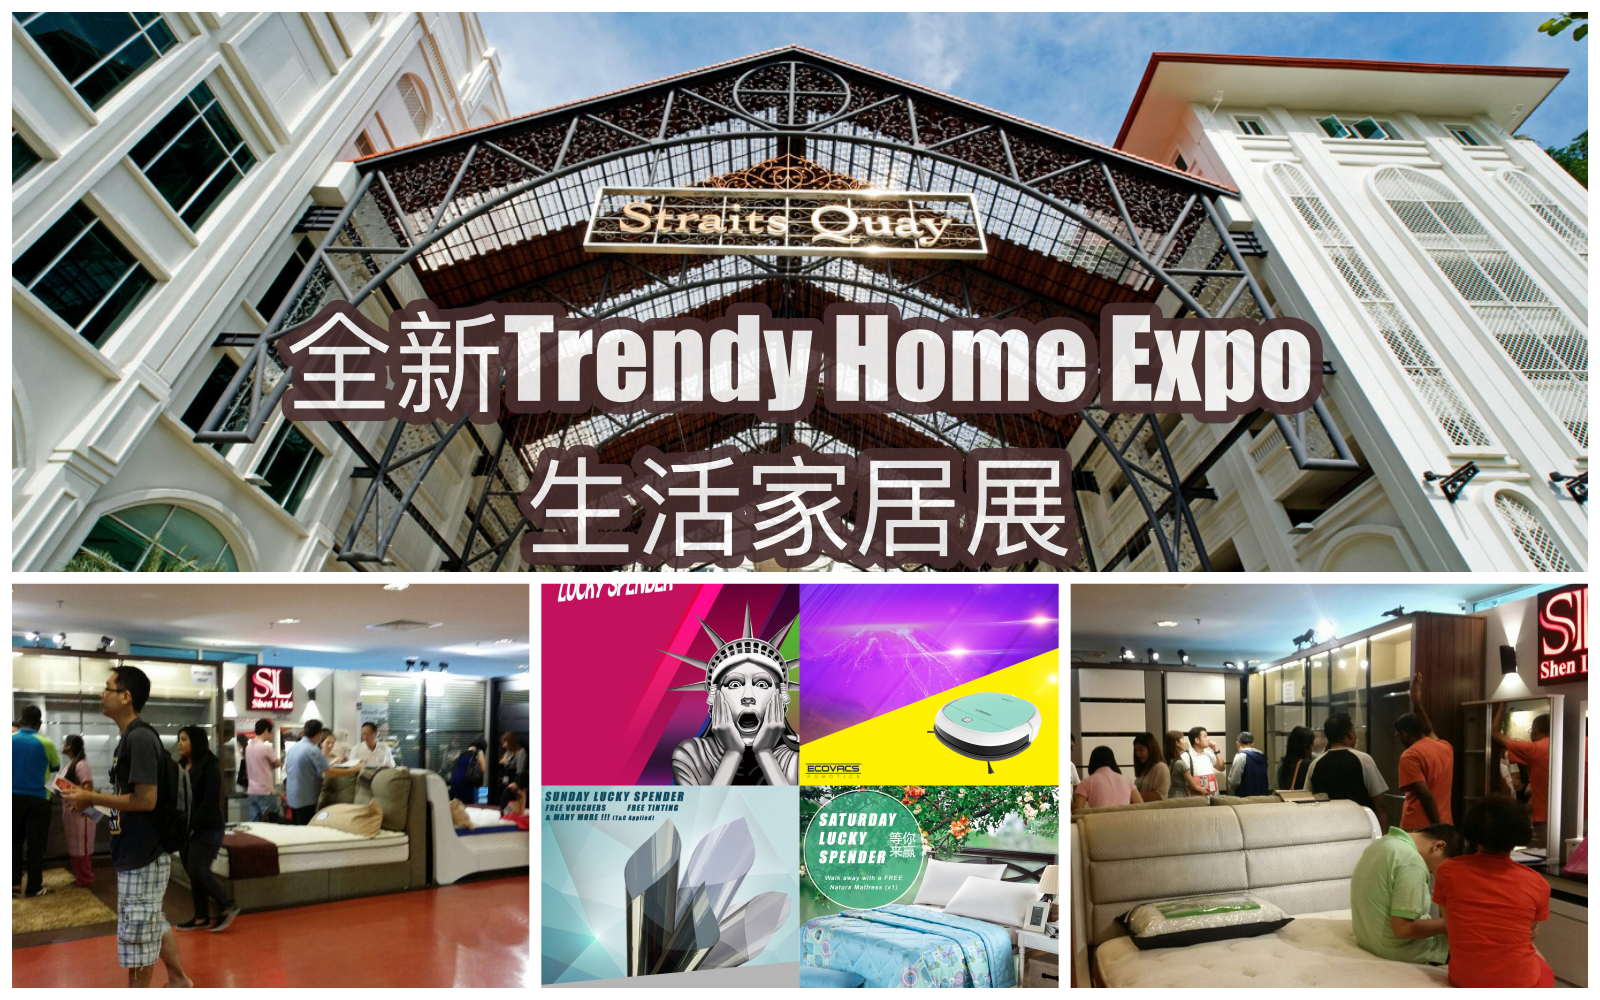 Trendy Home Expo生活家居展 @Straits Quay